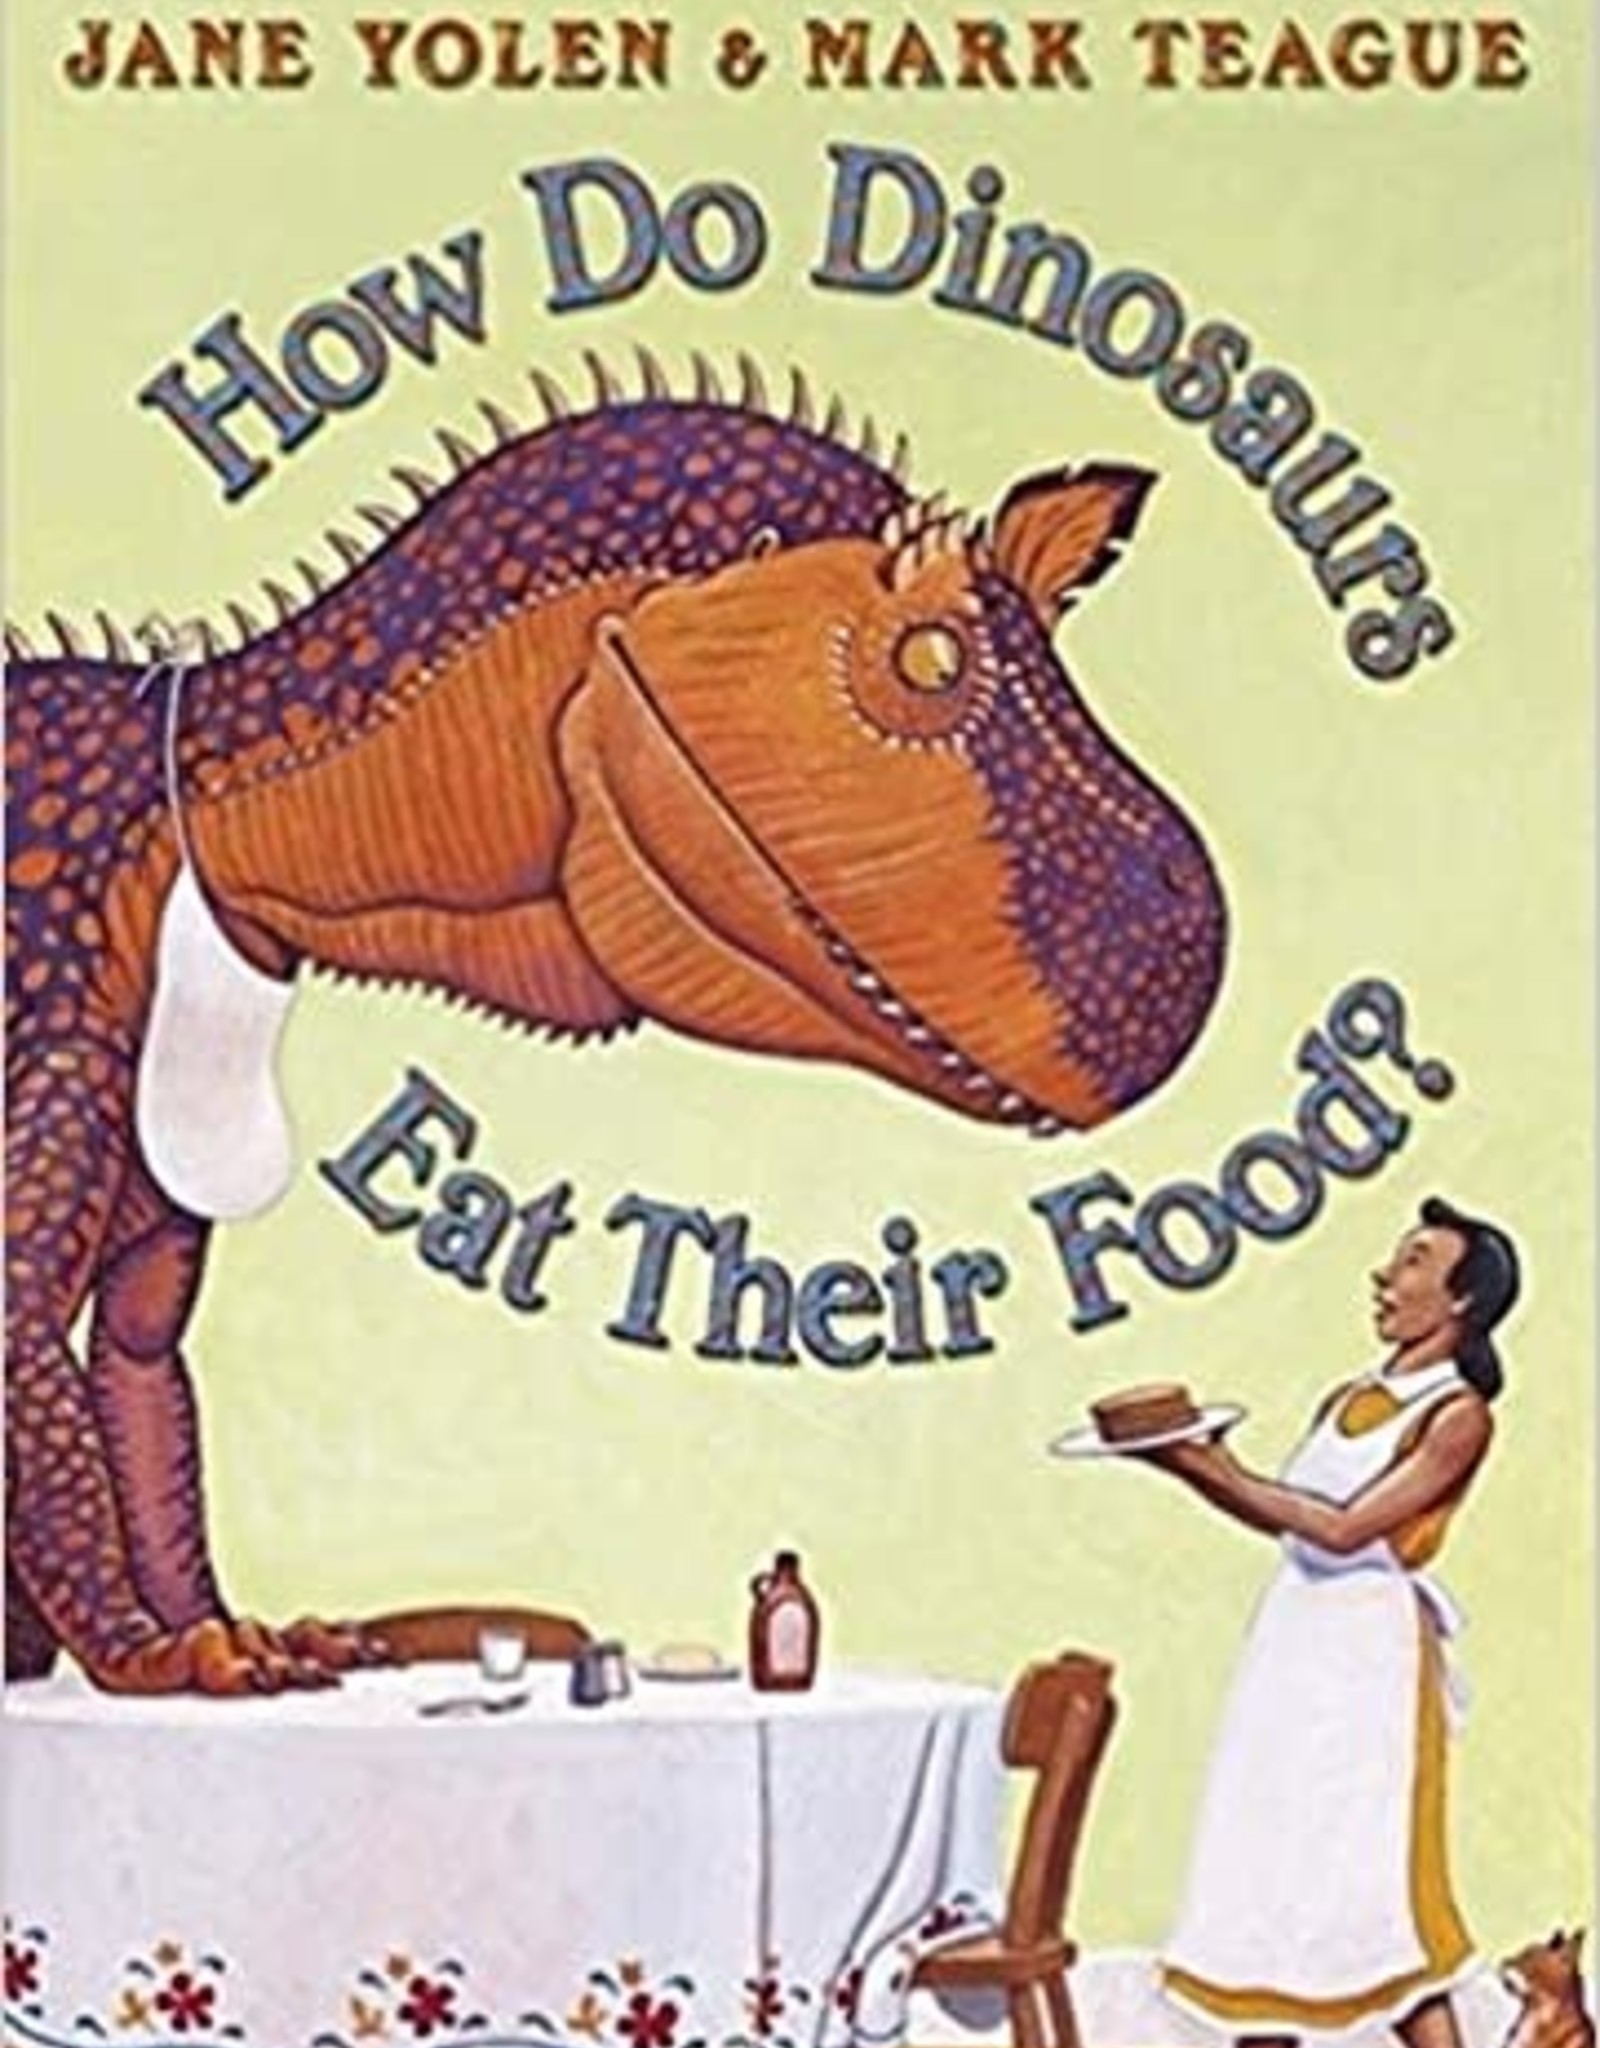 Scholastic How Do Dinosaurs Eat Their Food?